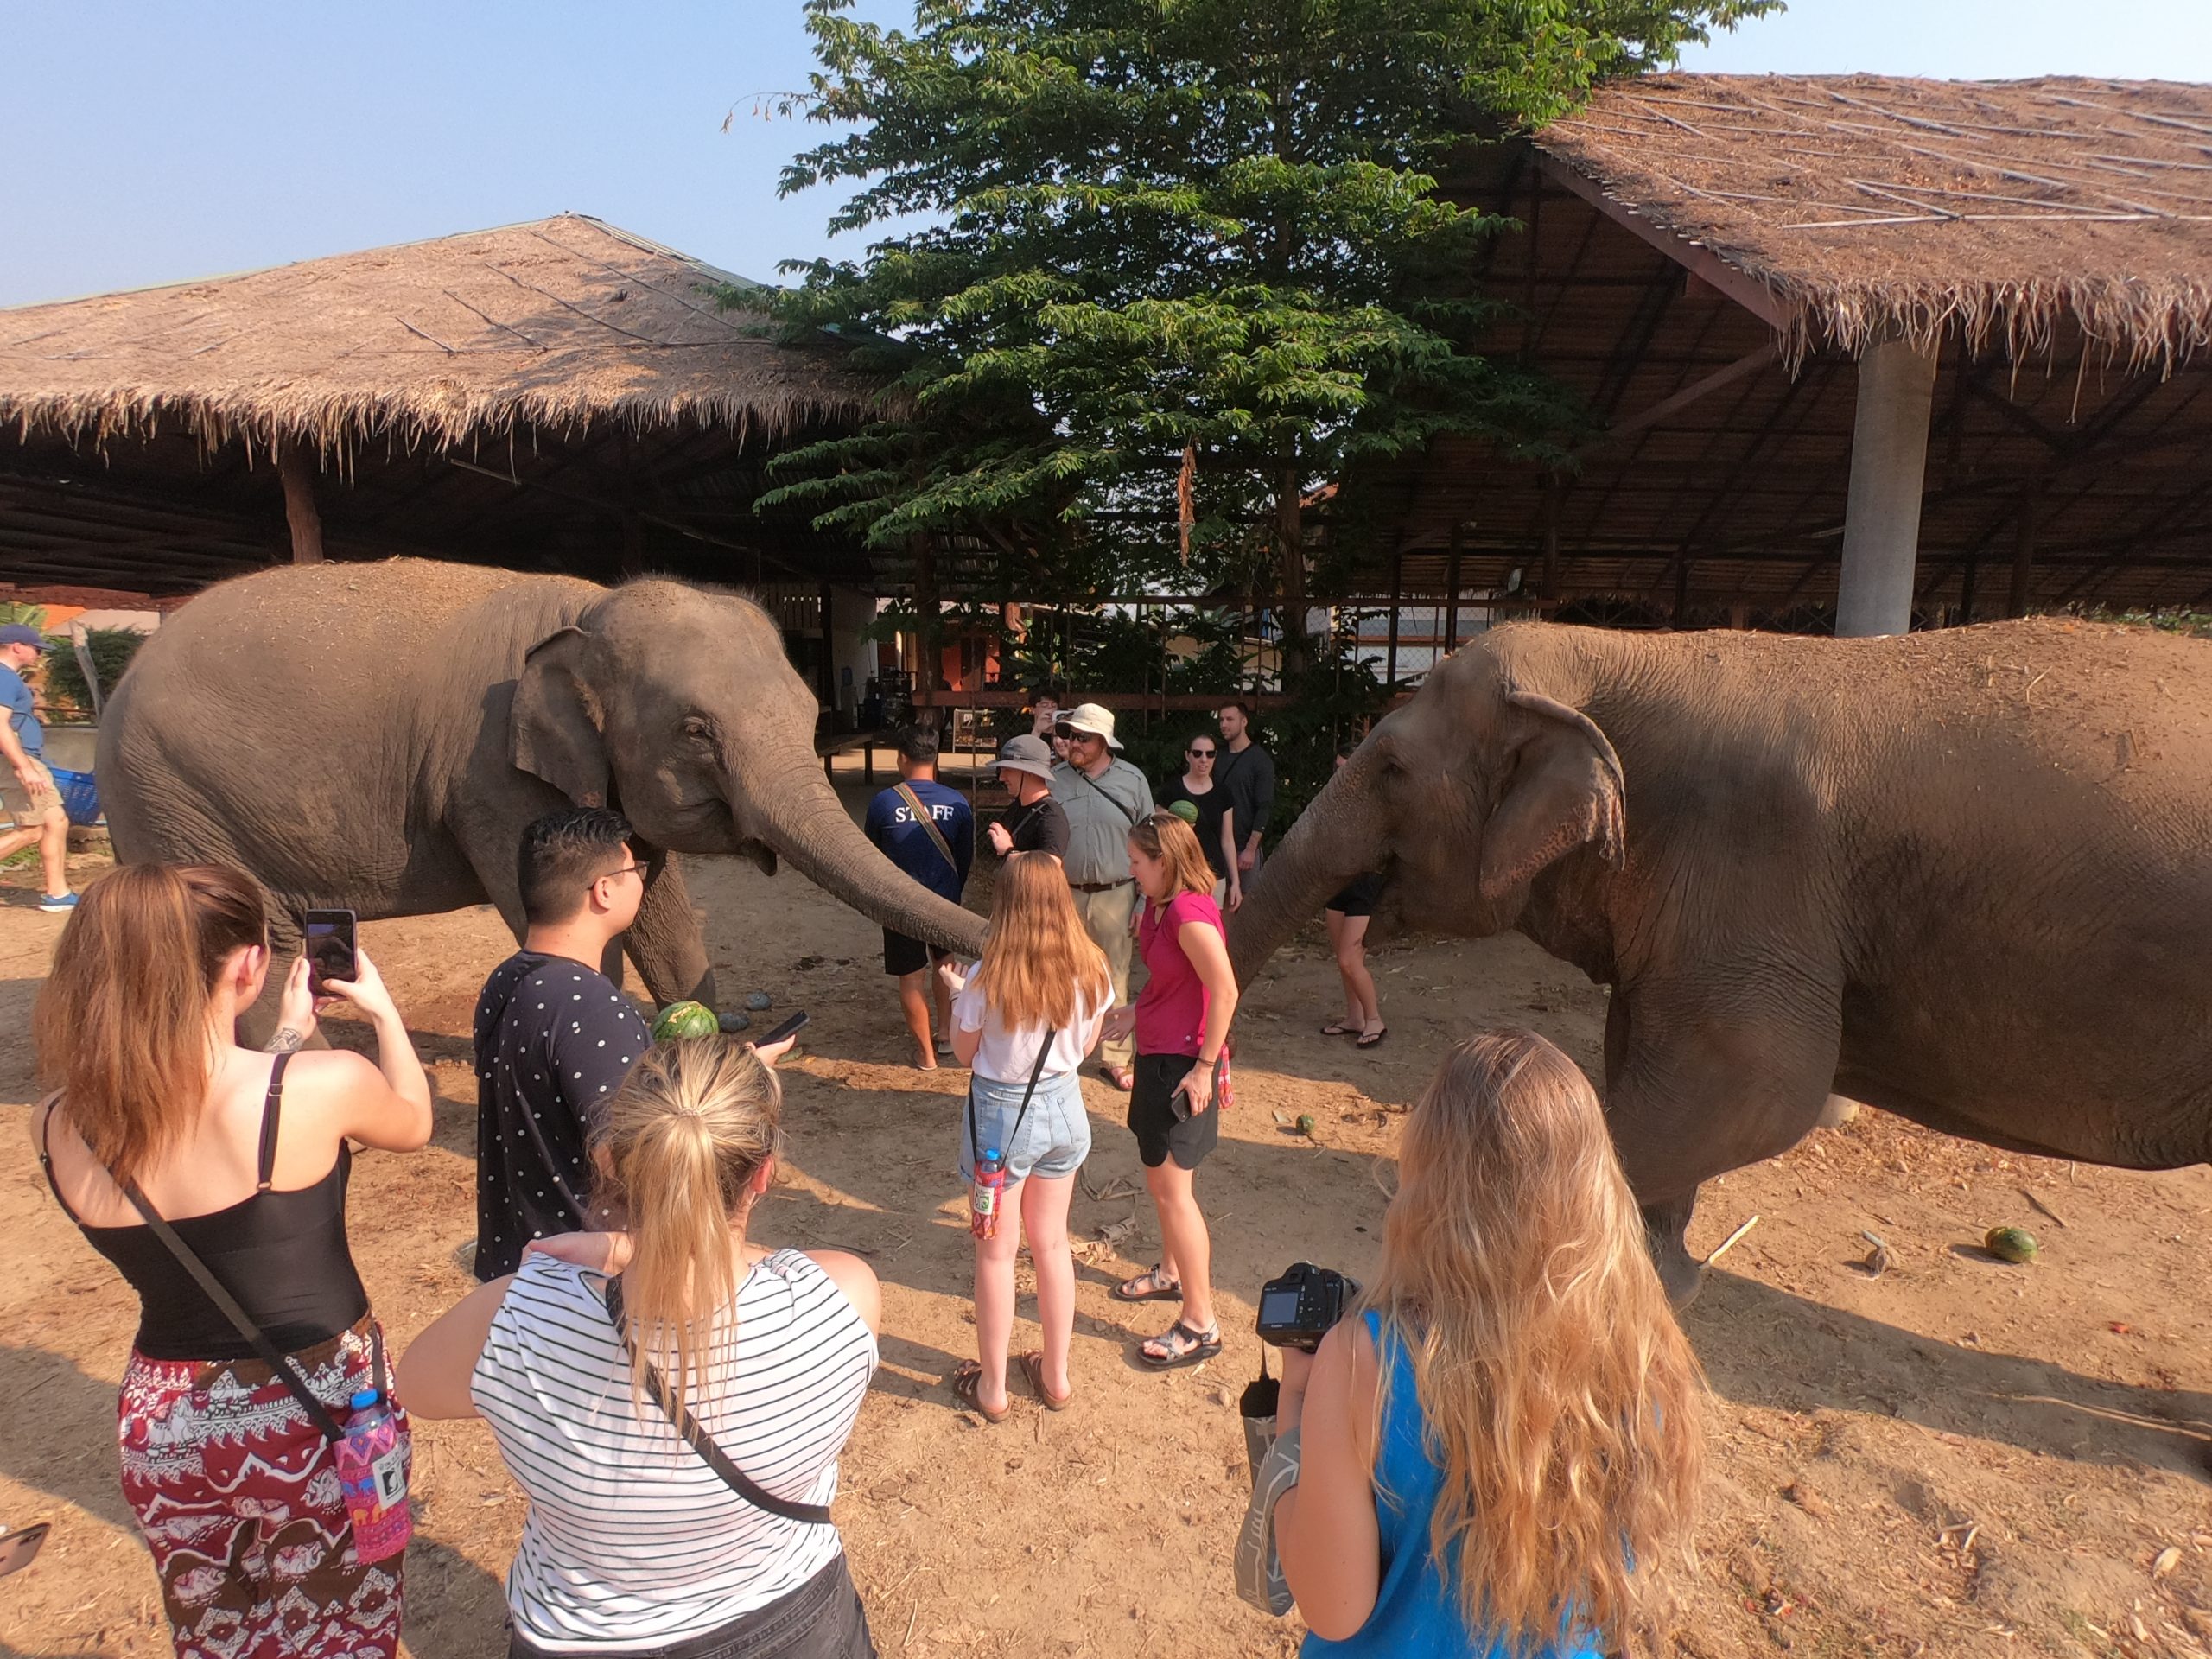 Petting the Elephants